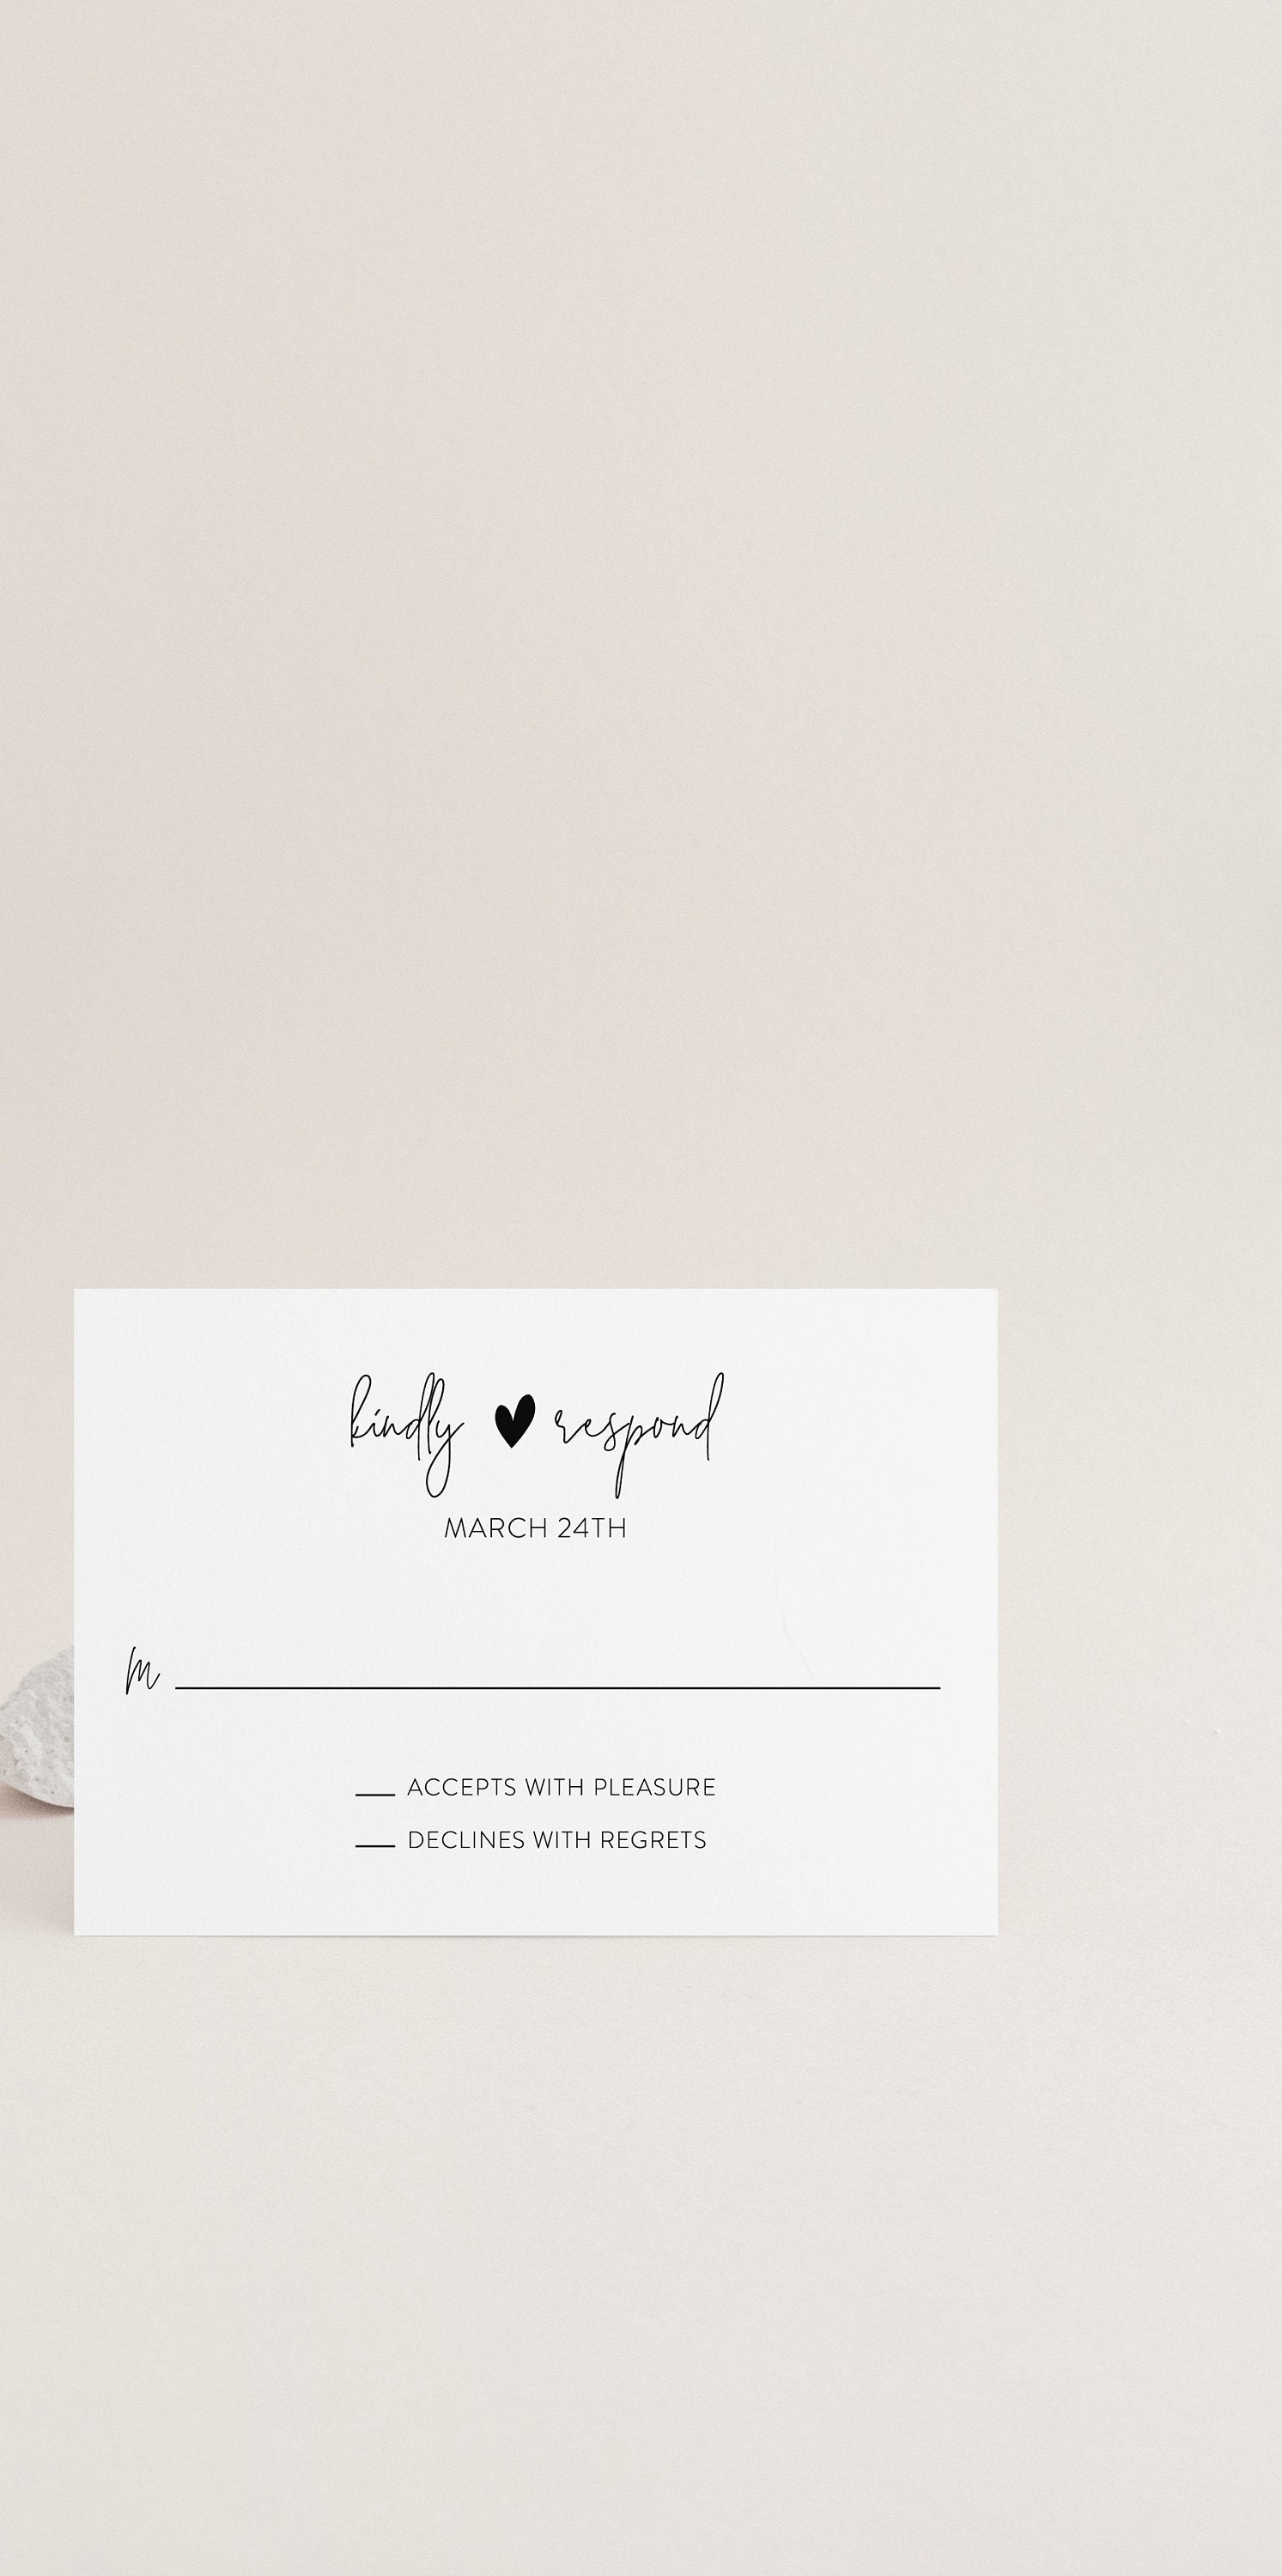 Minimalist Wedding RSVP Card Template, RSVP cards Response Card - Gab RSVP & DETAILS CARDS SAVVY PAPER CO